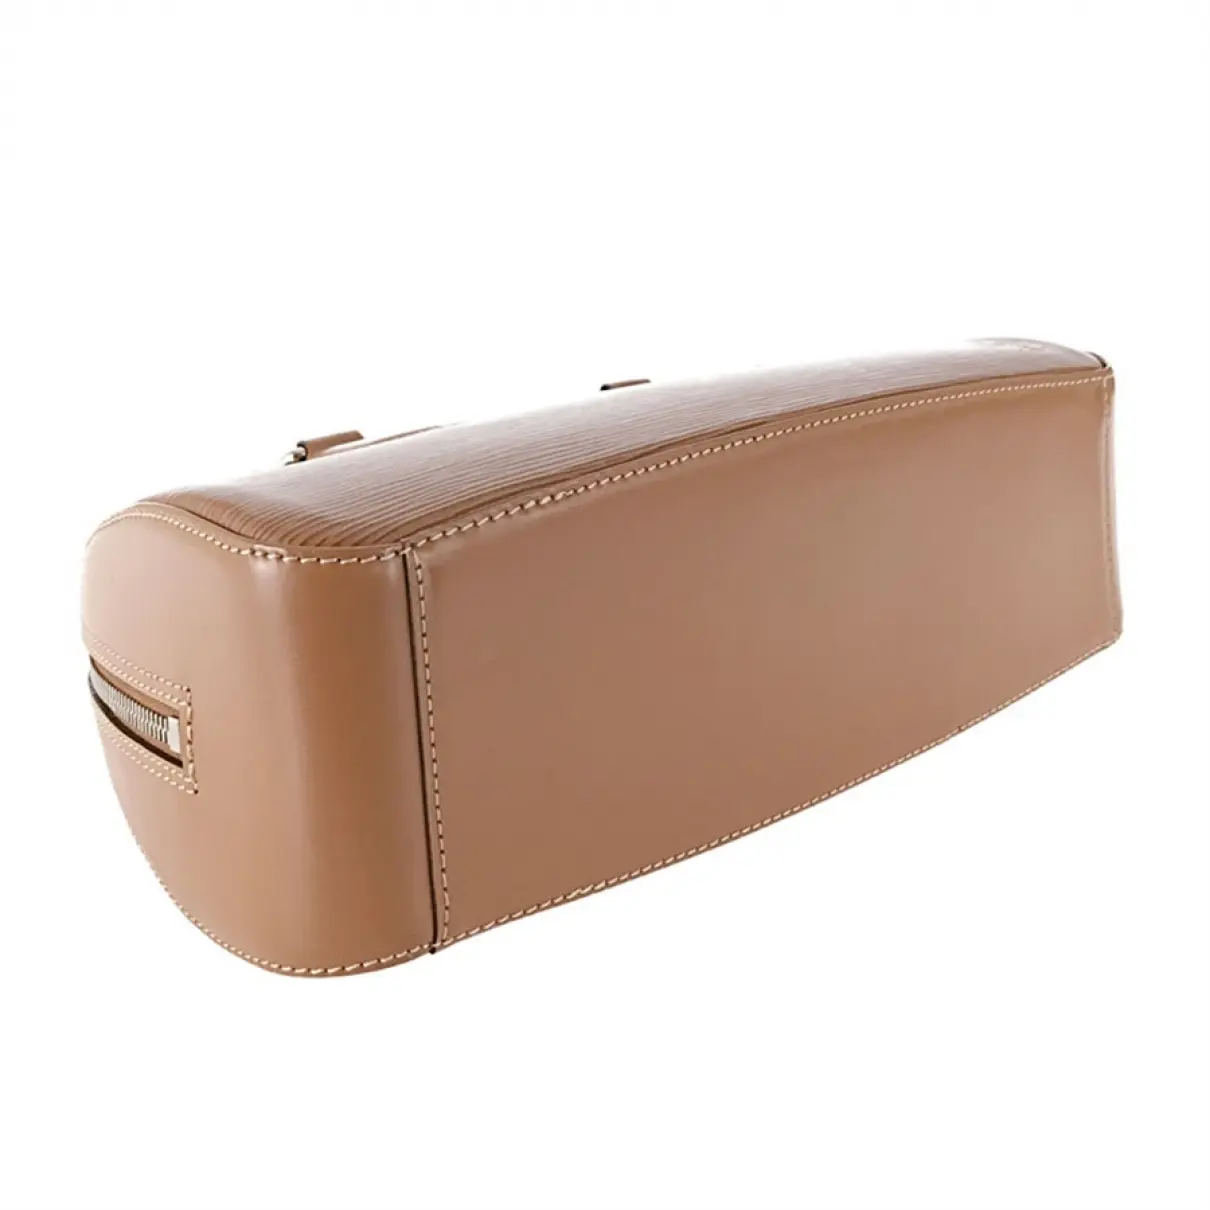 Buy Louis Vuitton Jasmin leather handbag online